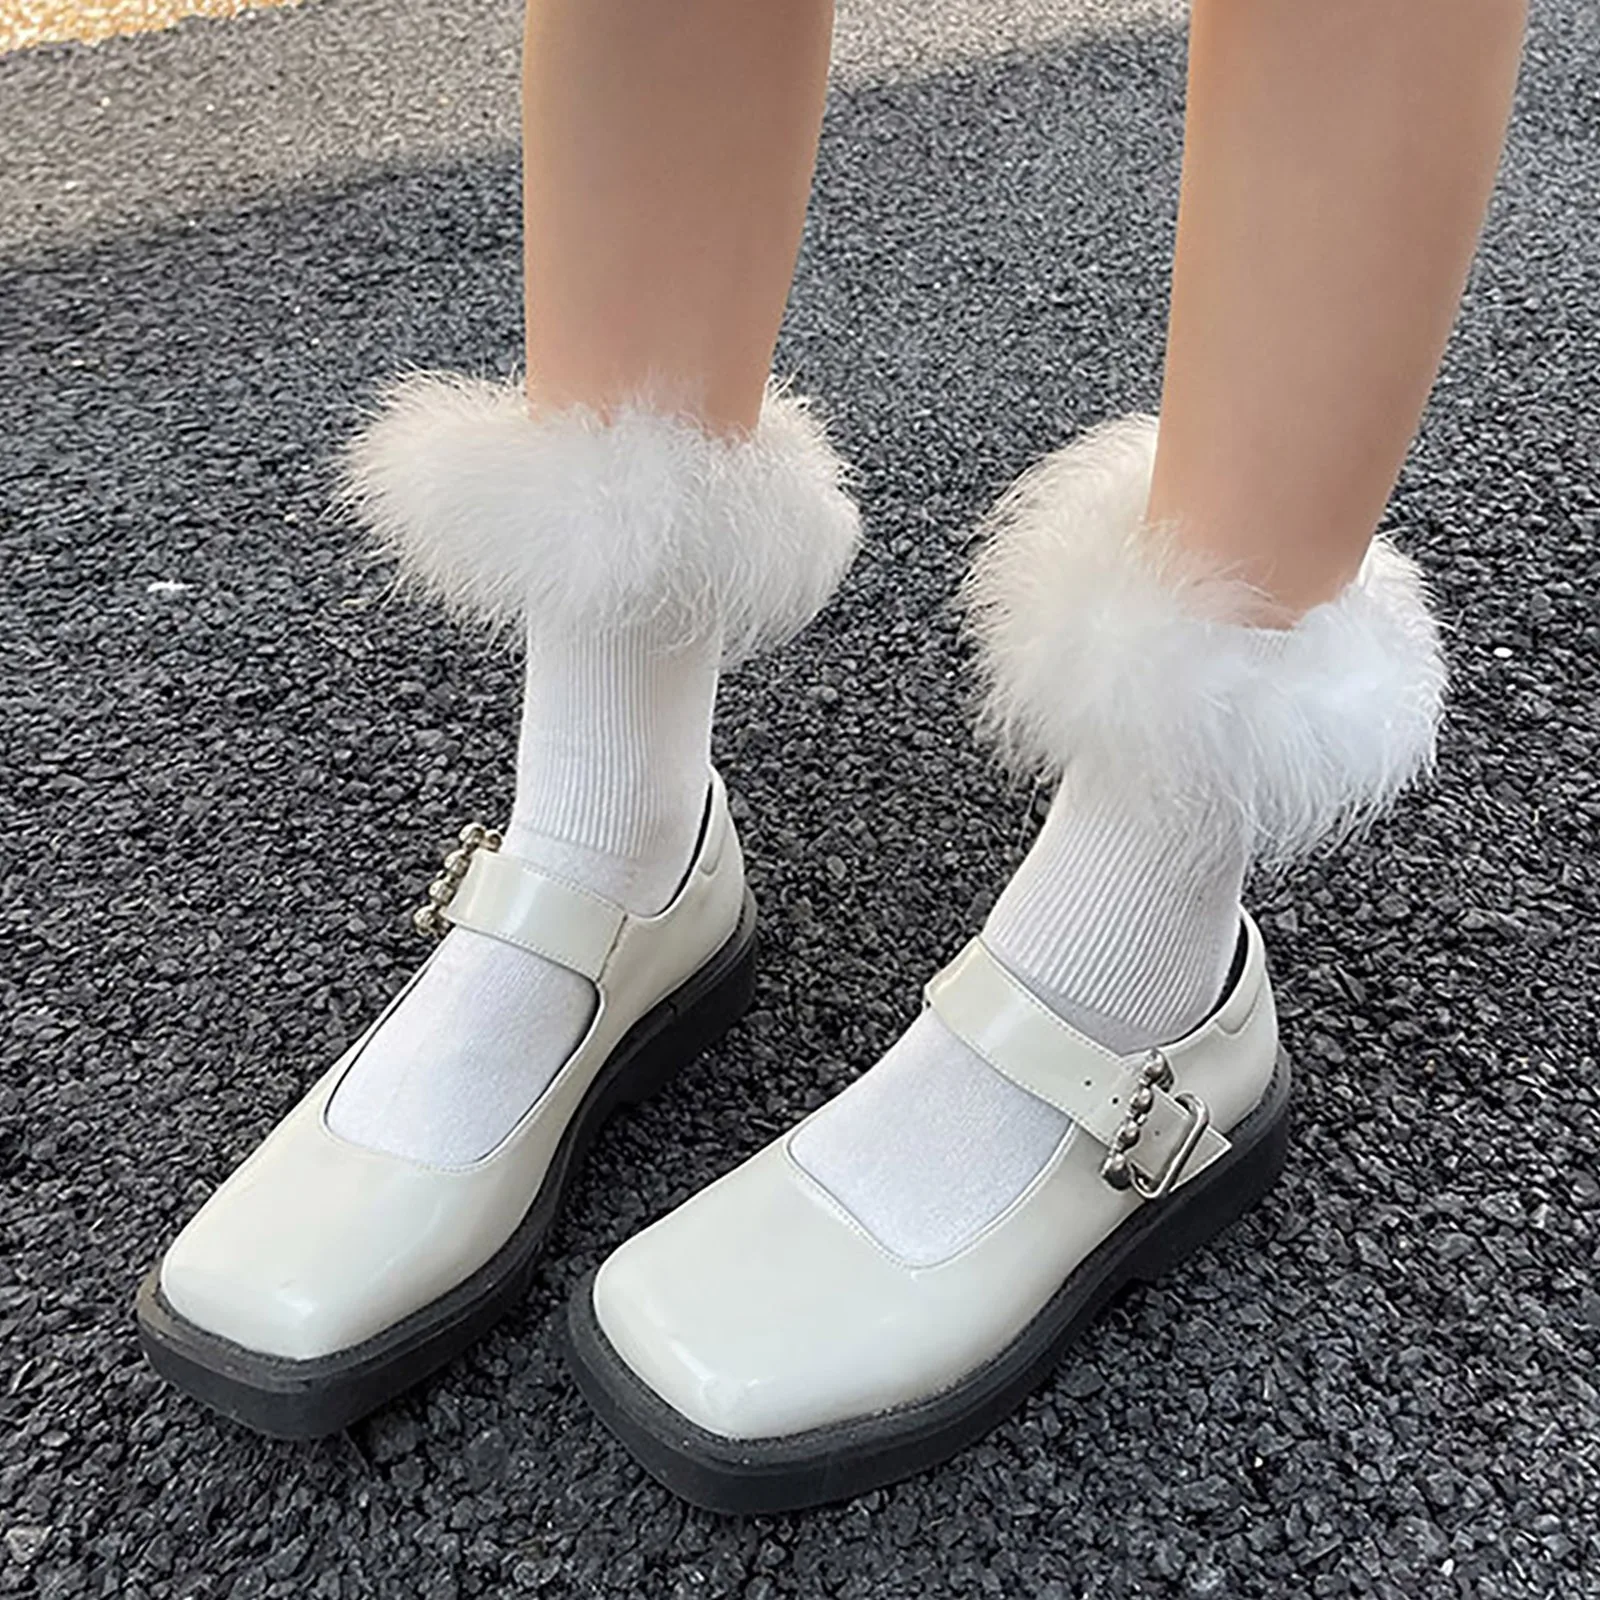 

Calf Boots Socks Jk Lolita Feather Boots Socks Japanese Cotton Thermal Cotton Socks Girl Socks Pile Socks Cosplay Accessories